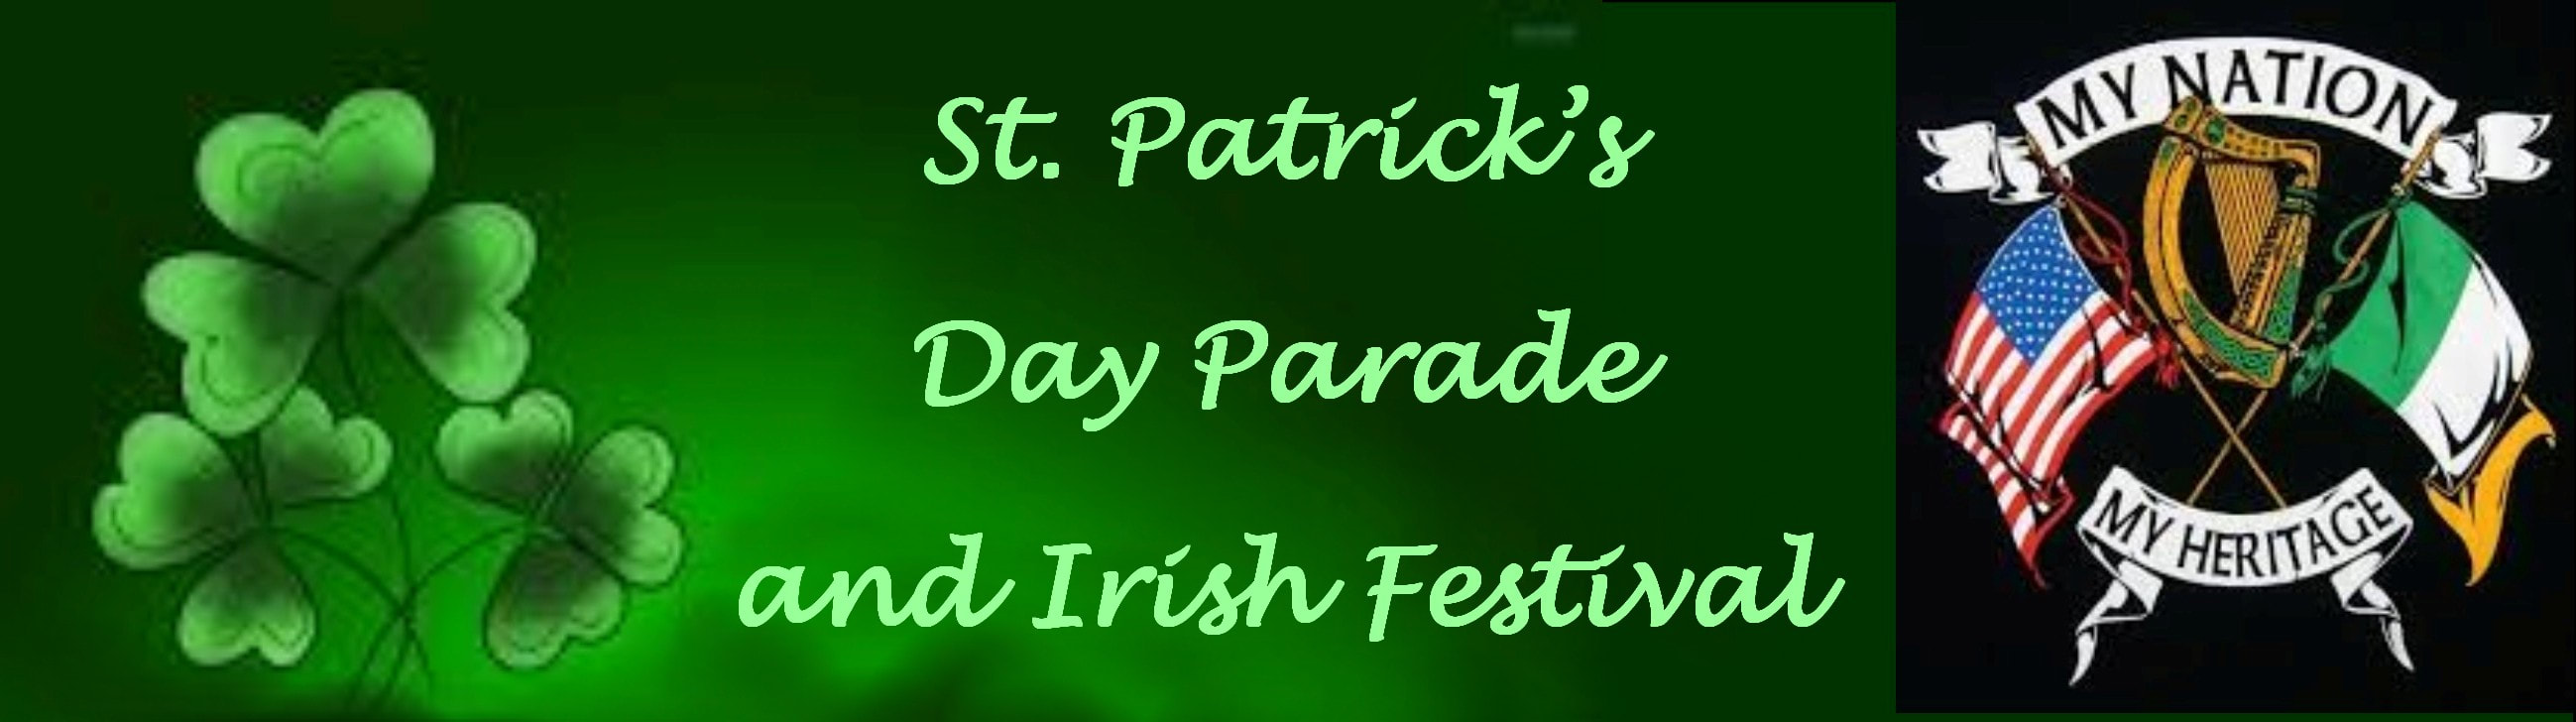 2019 St. Patricks Day Parade and Irish Festival